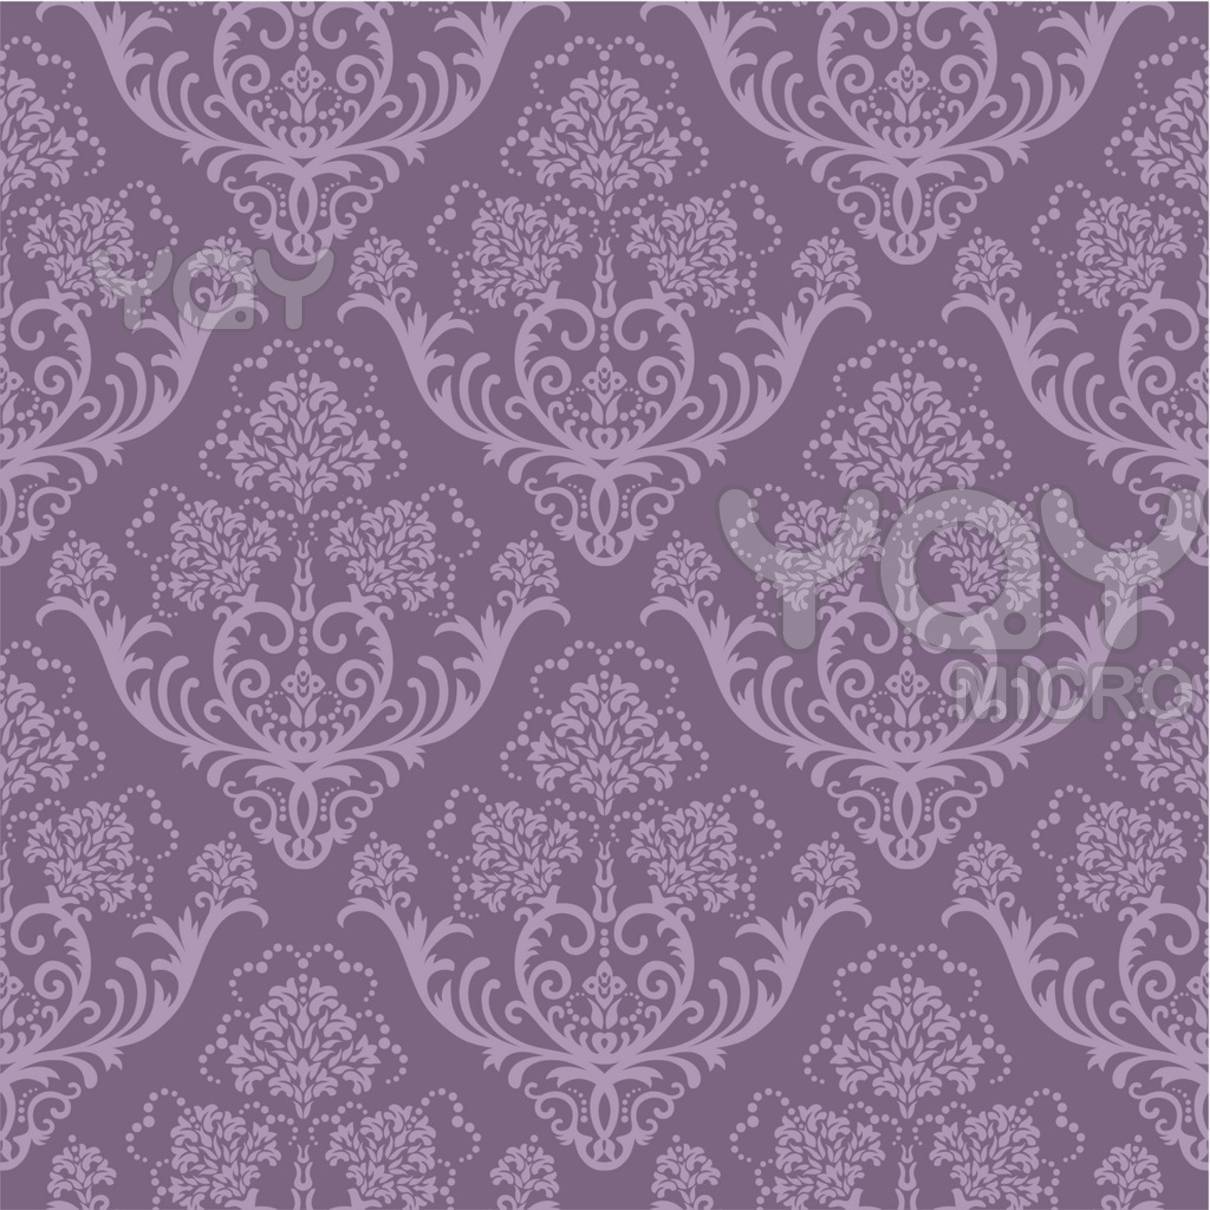 Seamless Purple Floral Wallpaper 7fcc27 Jpg